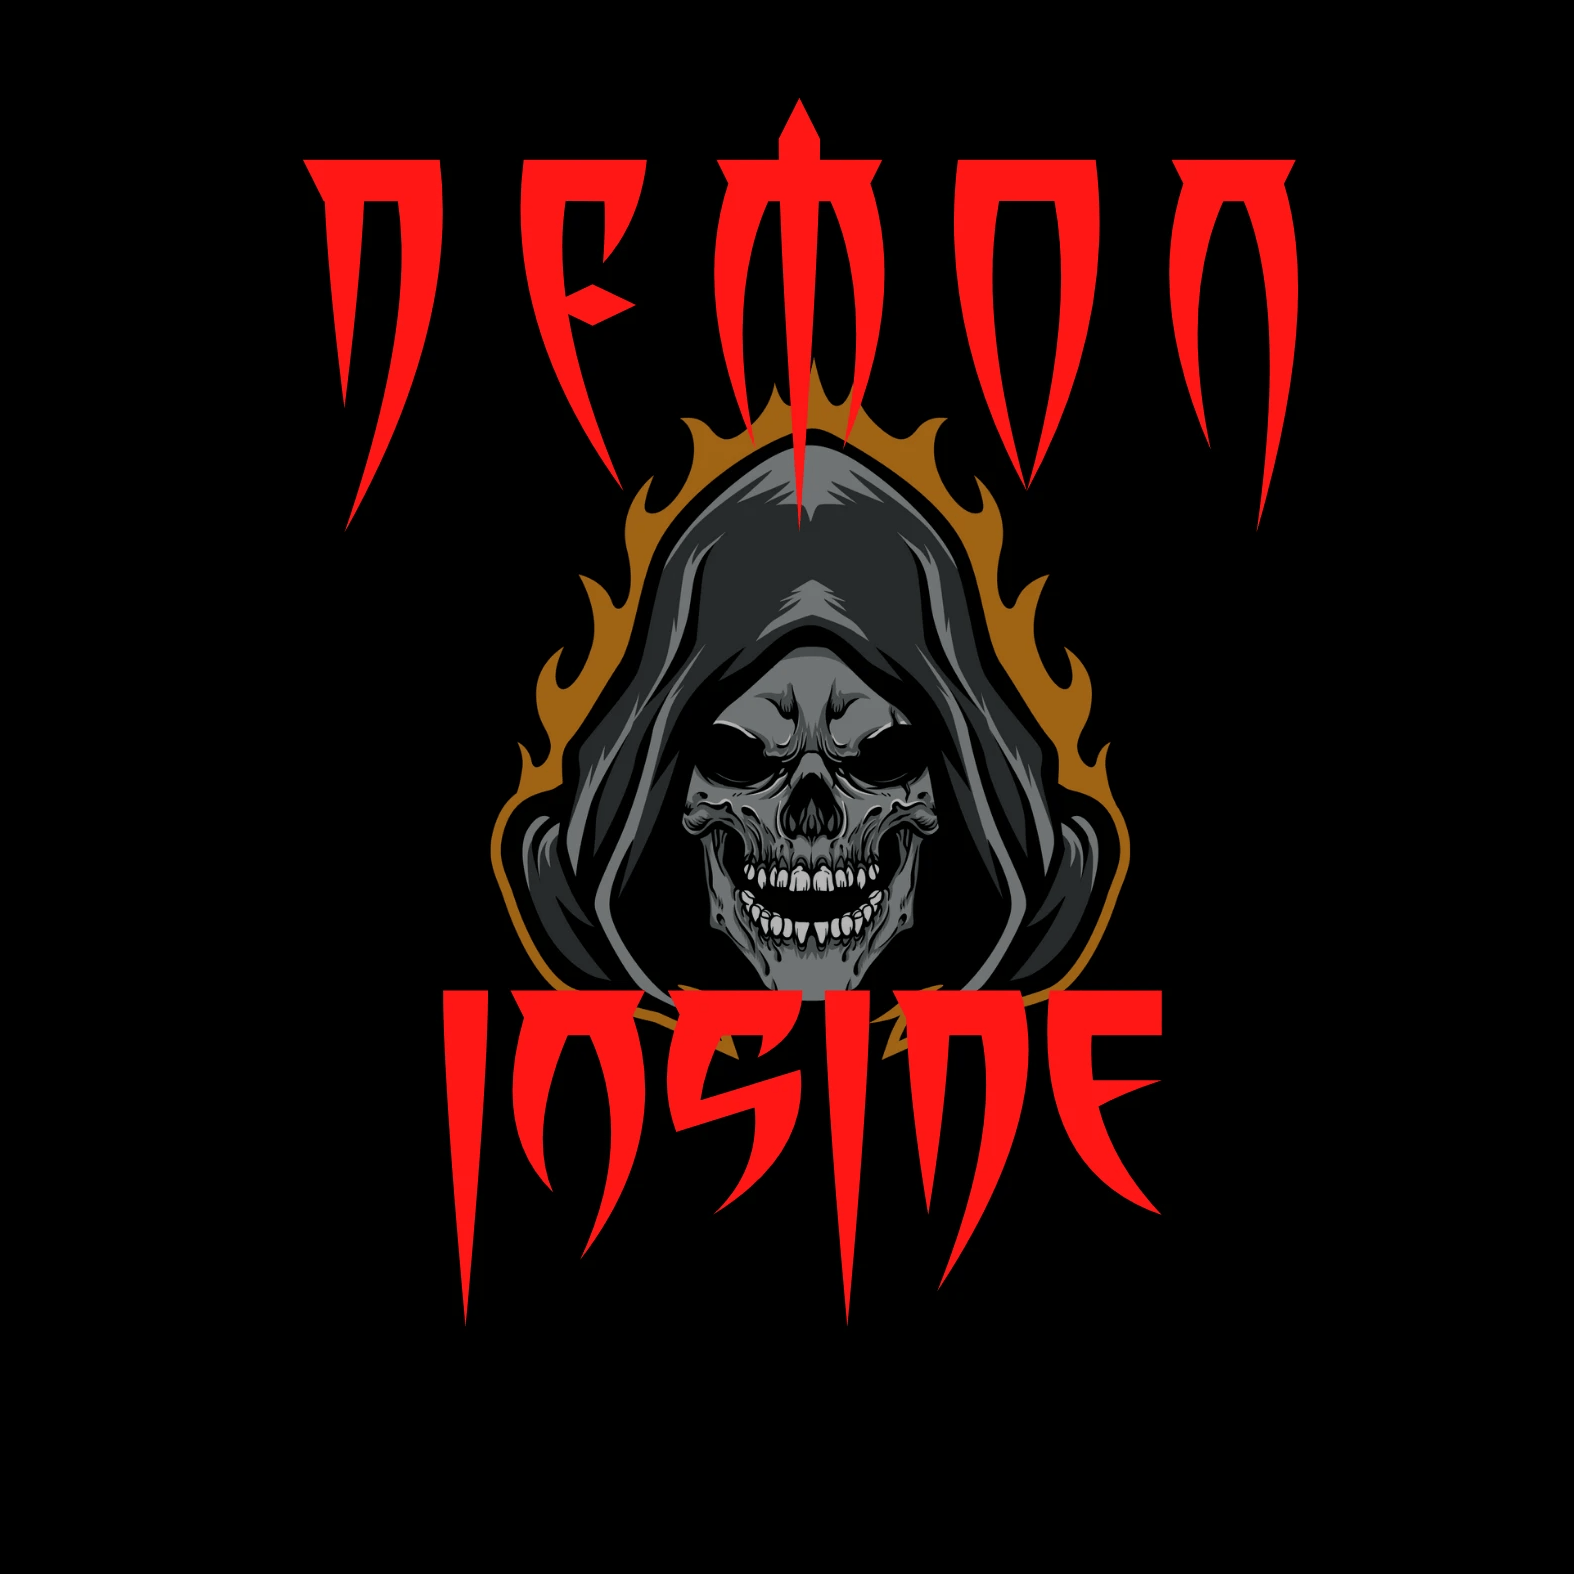 Demon Inside Women's T-shirt - Ken Adams